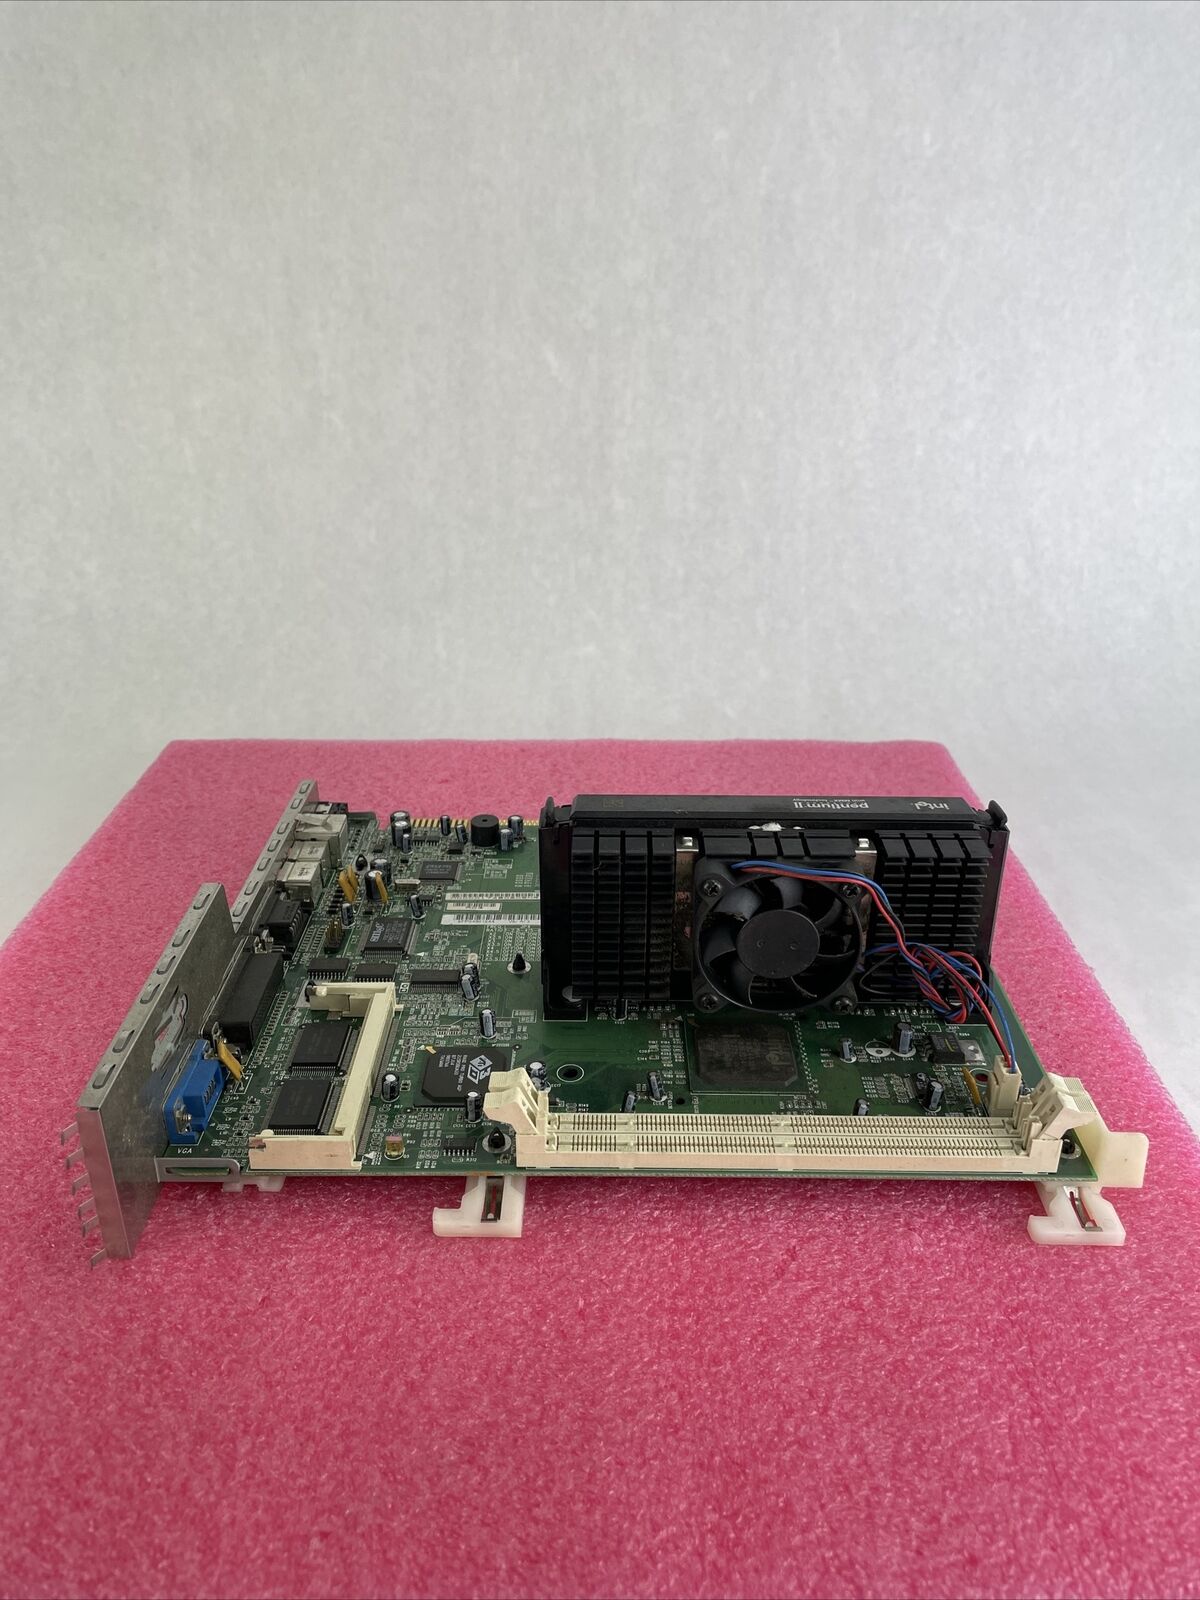 Toshiba Equim 7100D Motherboard Intel Pentium II 333MHz No RAM